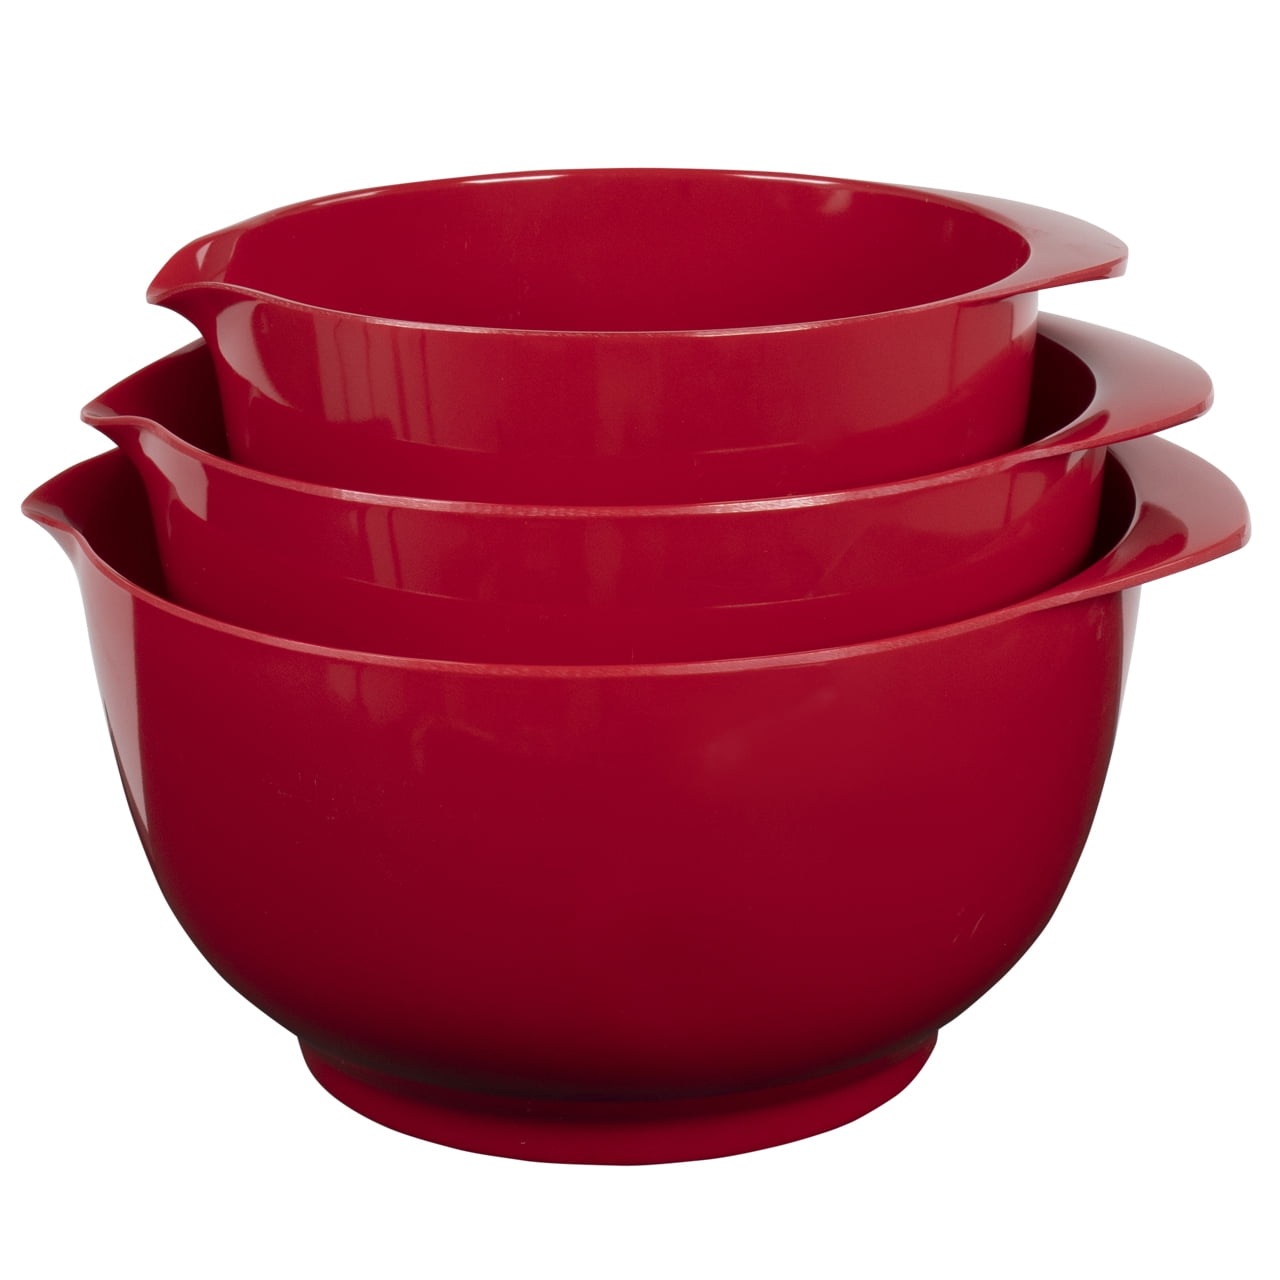 Hutzler Red Melamine Mixing Bowls, 3-Pc. Set